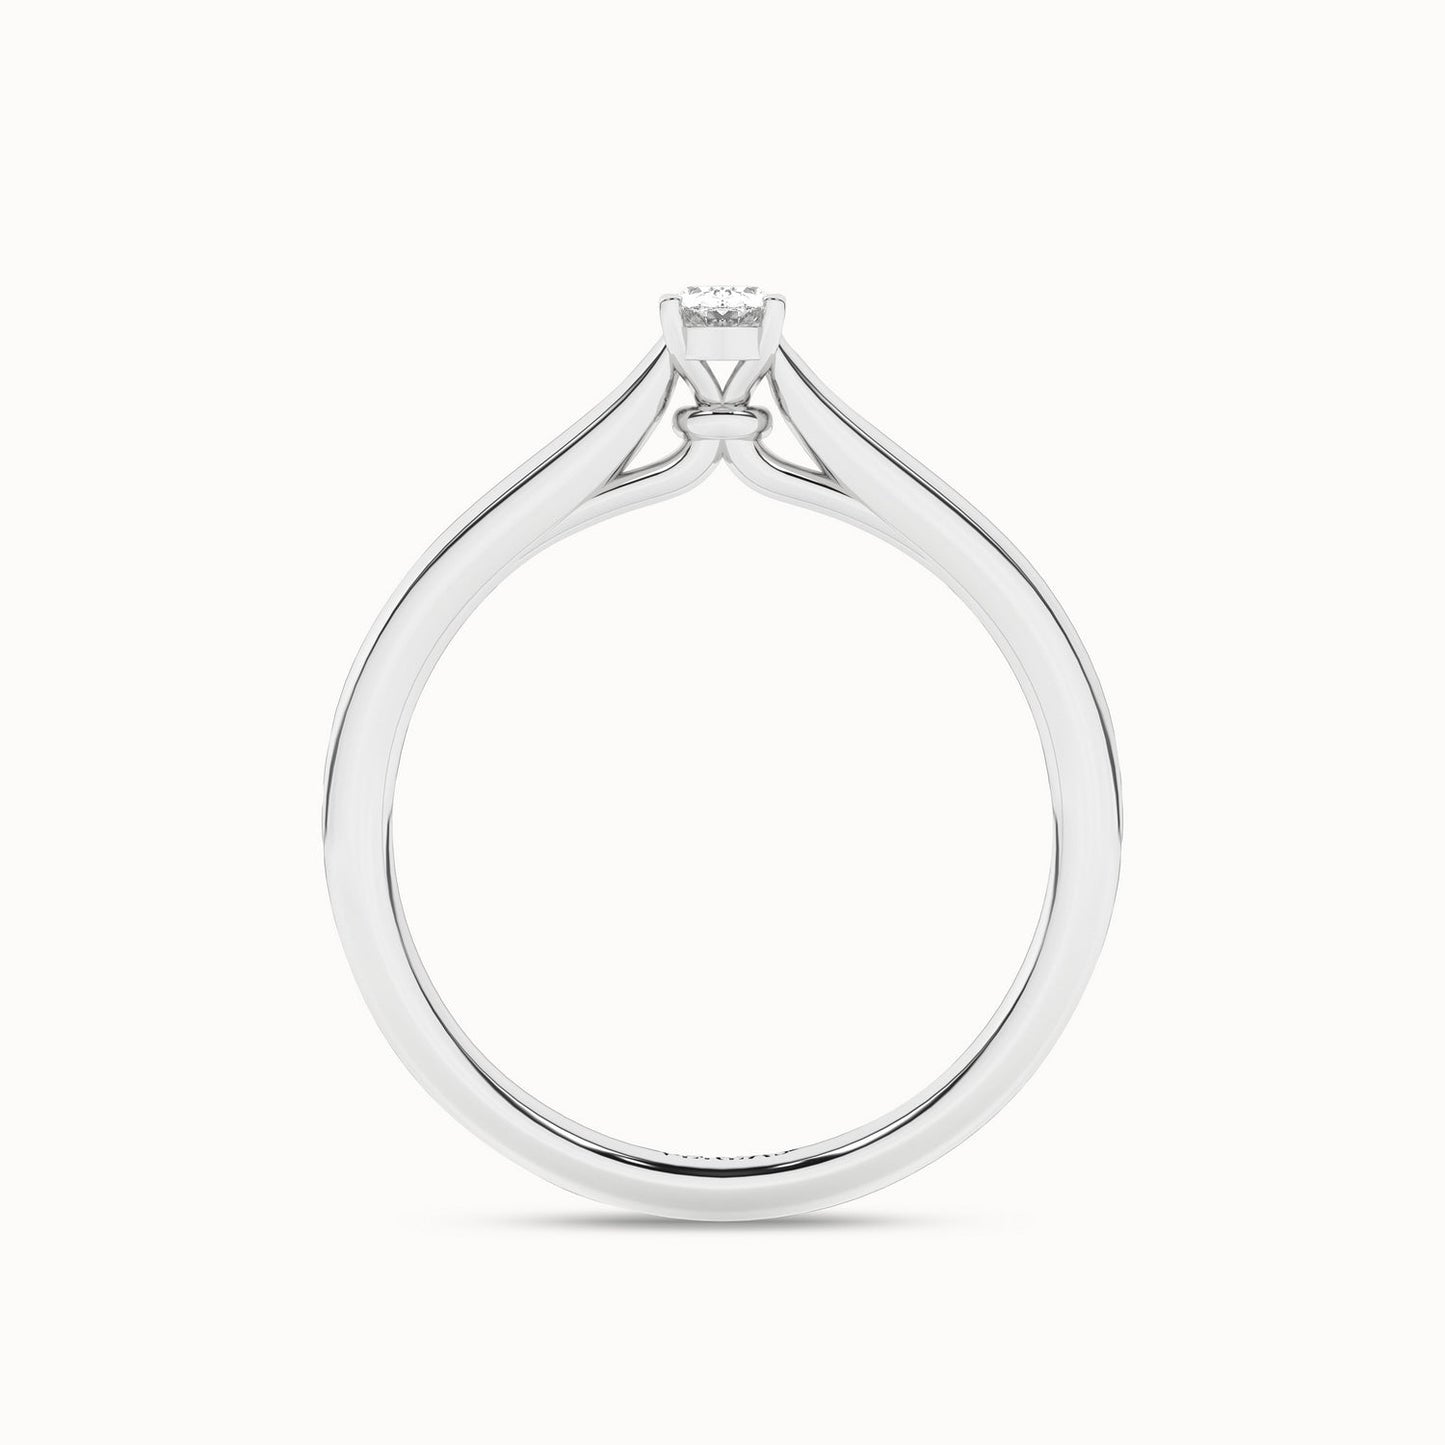 Iconic Ellipse Ring_Product Angle_1/6-3